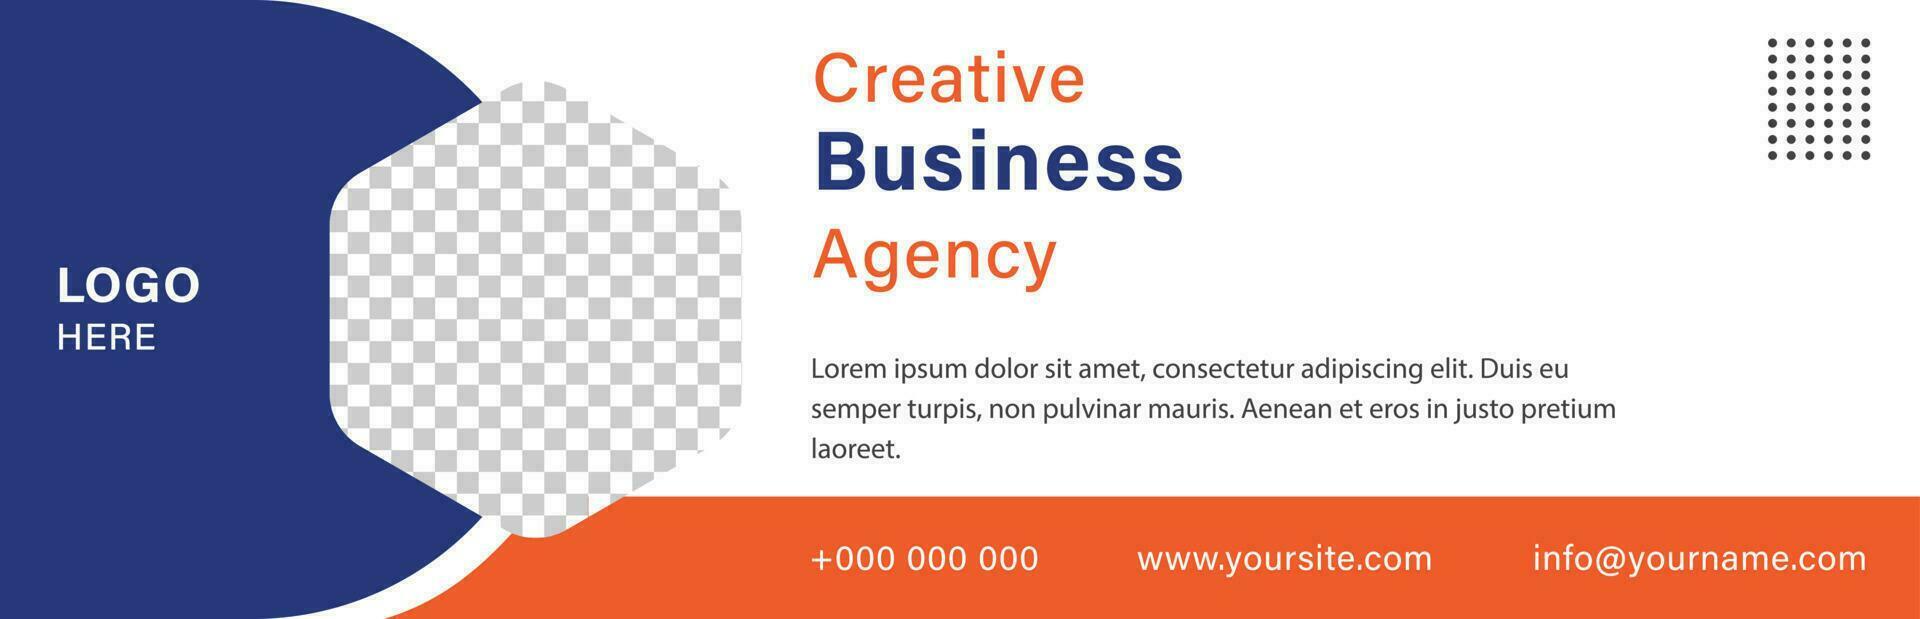 modern web banner template. blue and orange color background. cover banner design vector